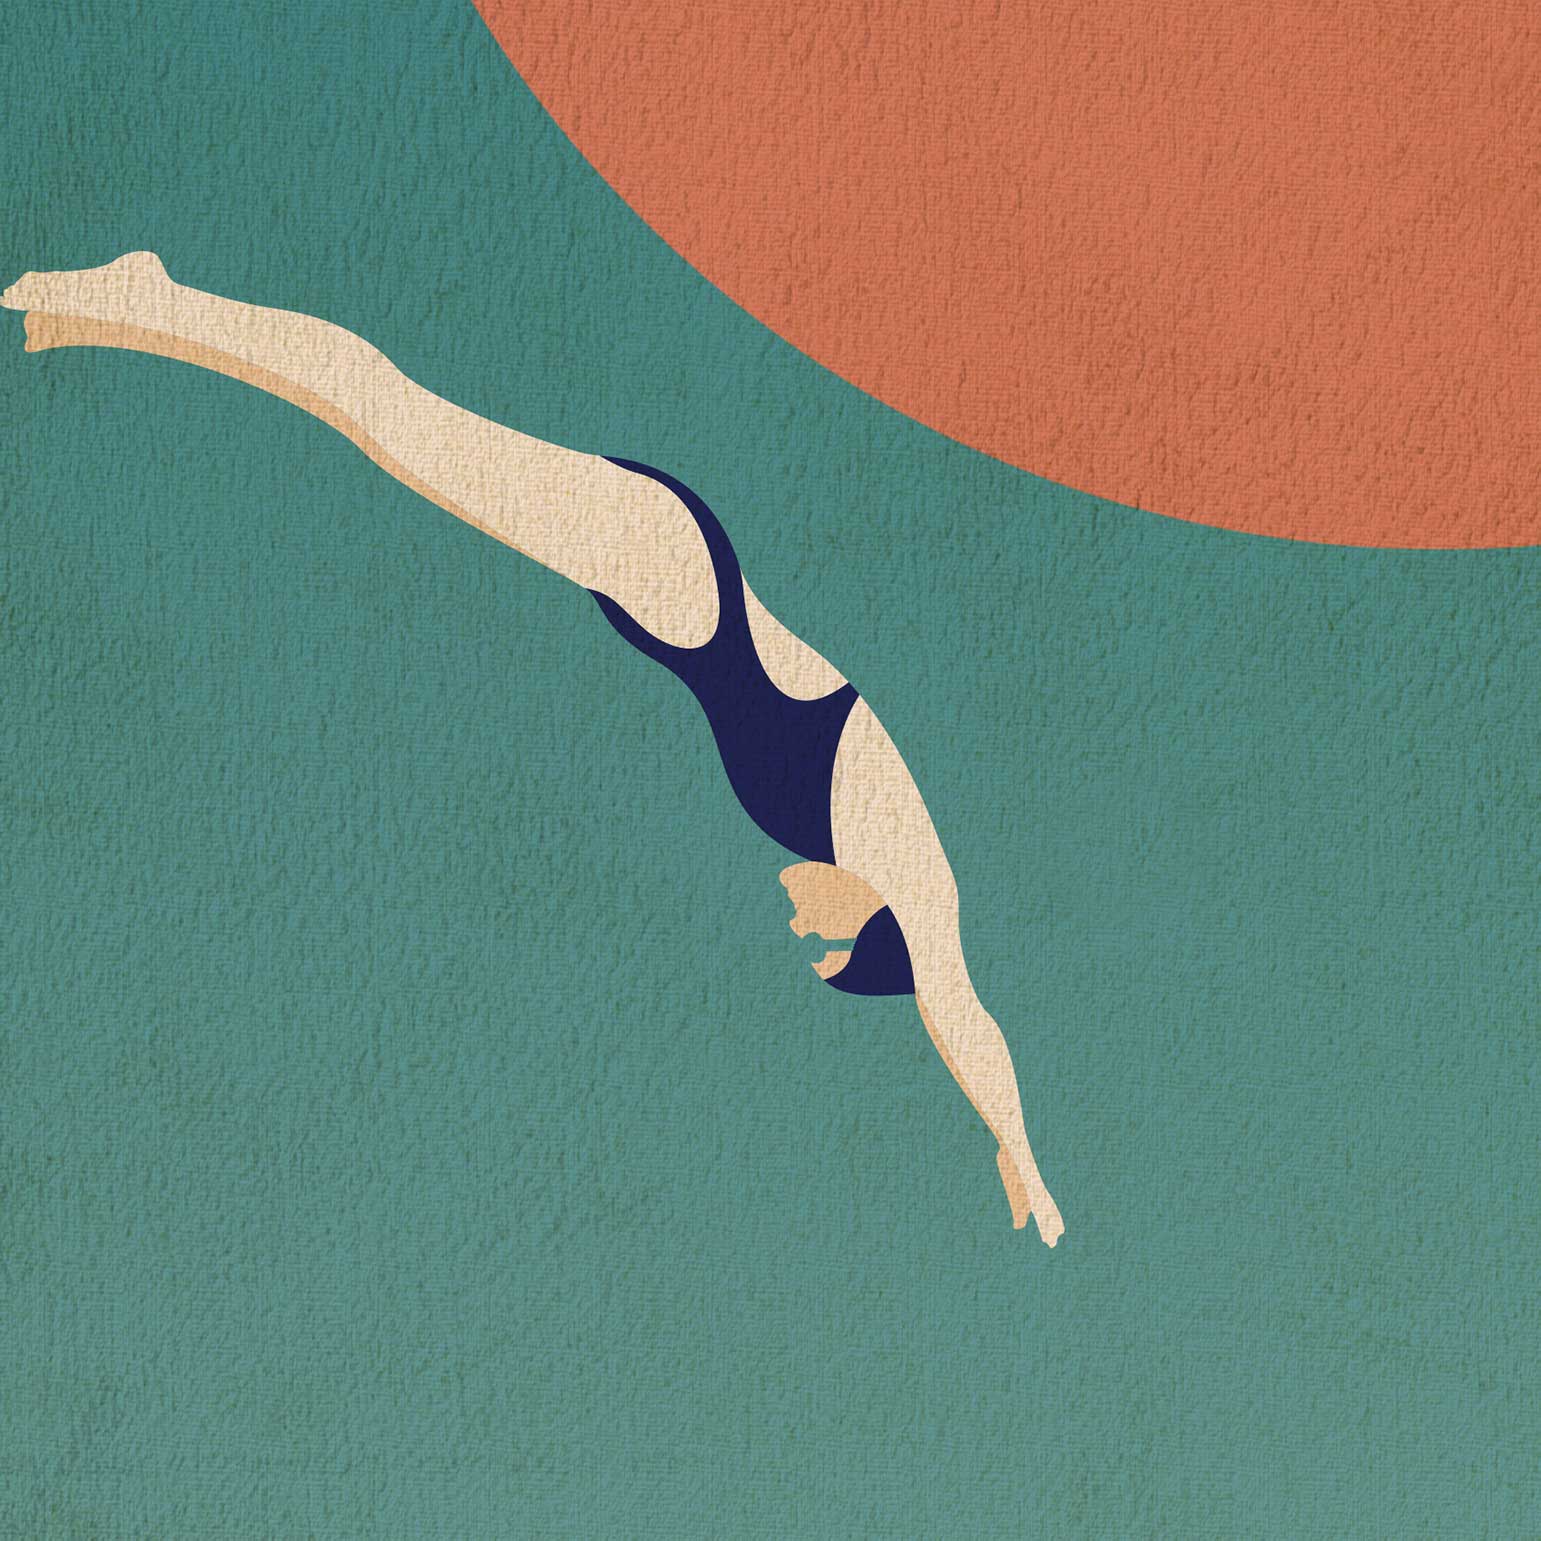 Diving modernist minimalist poster